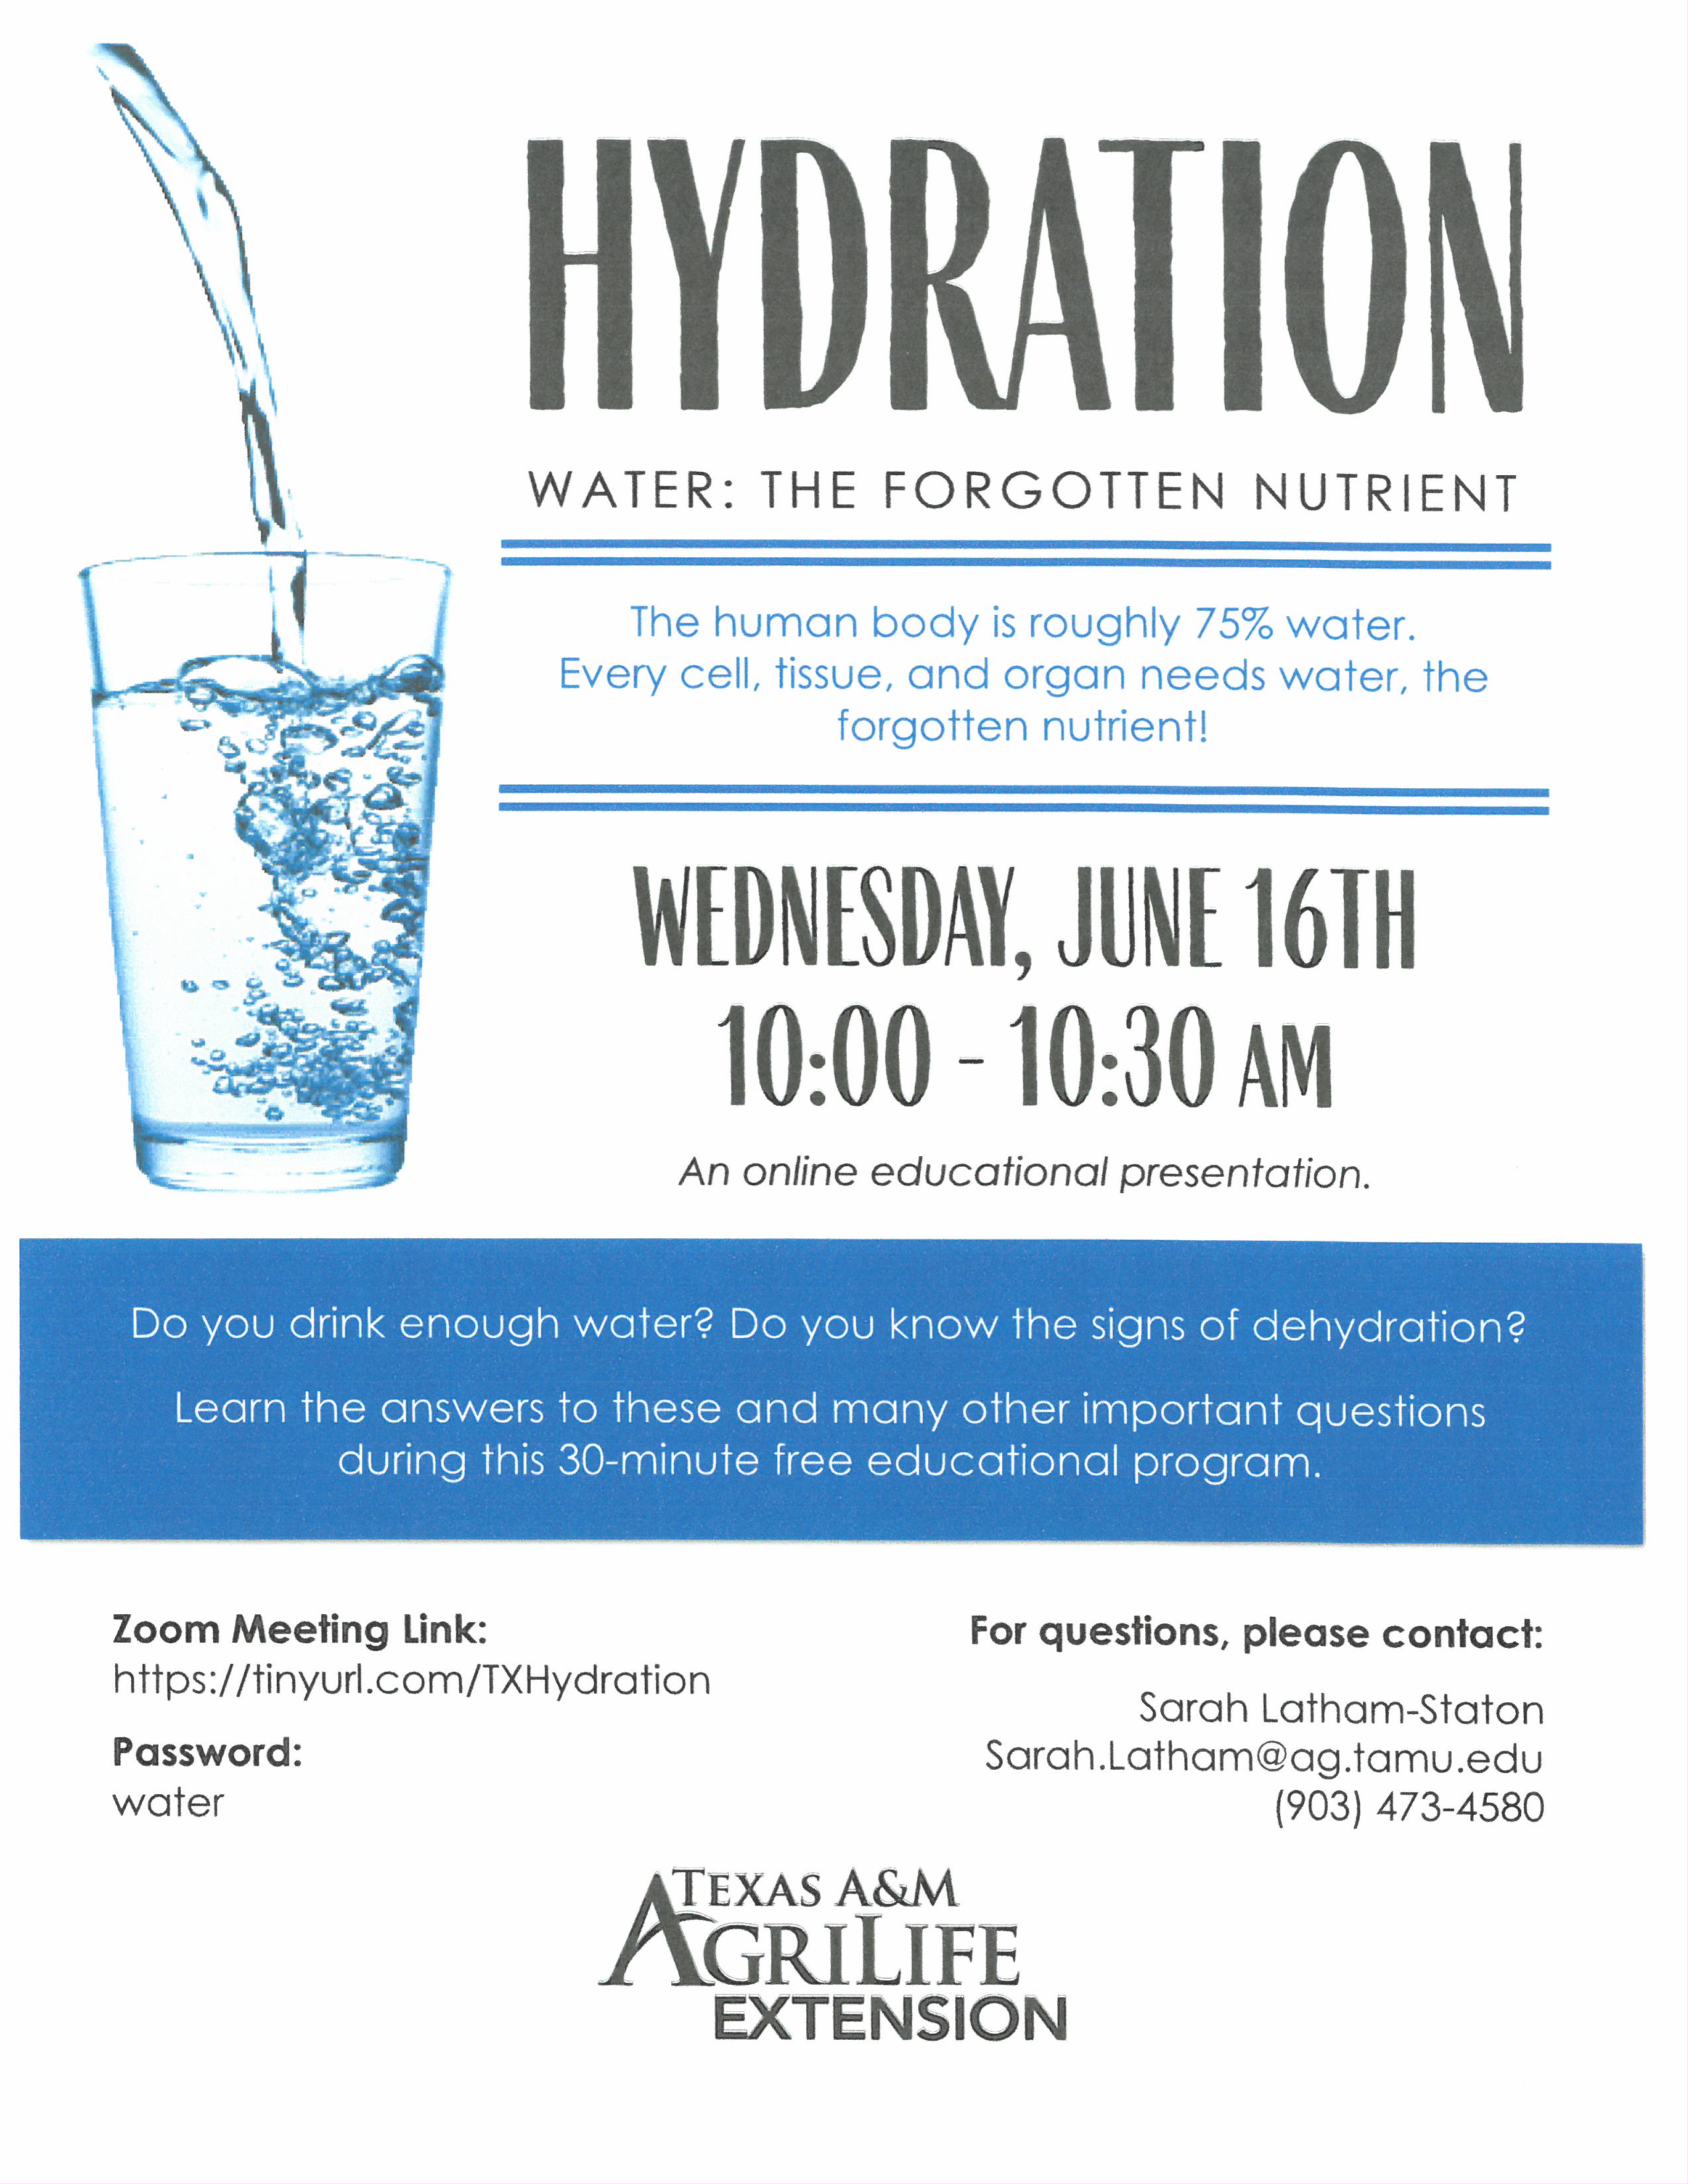 Hydration program flyer.jpg